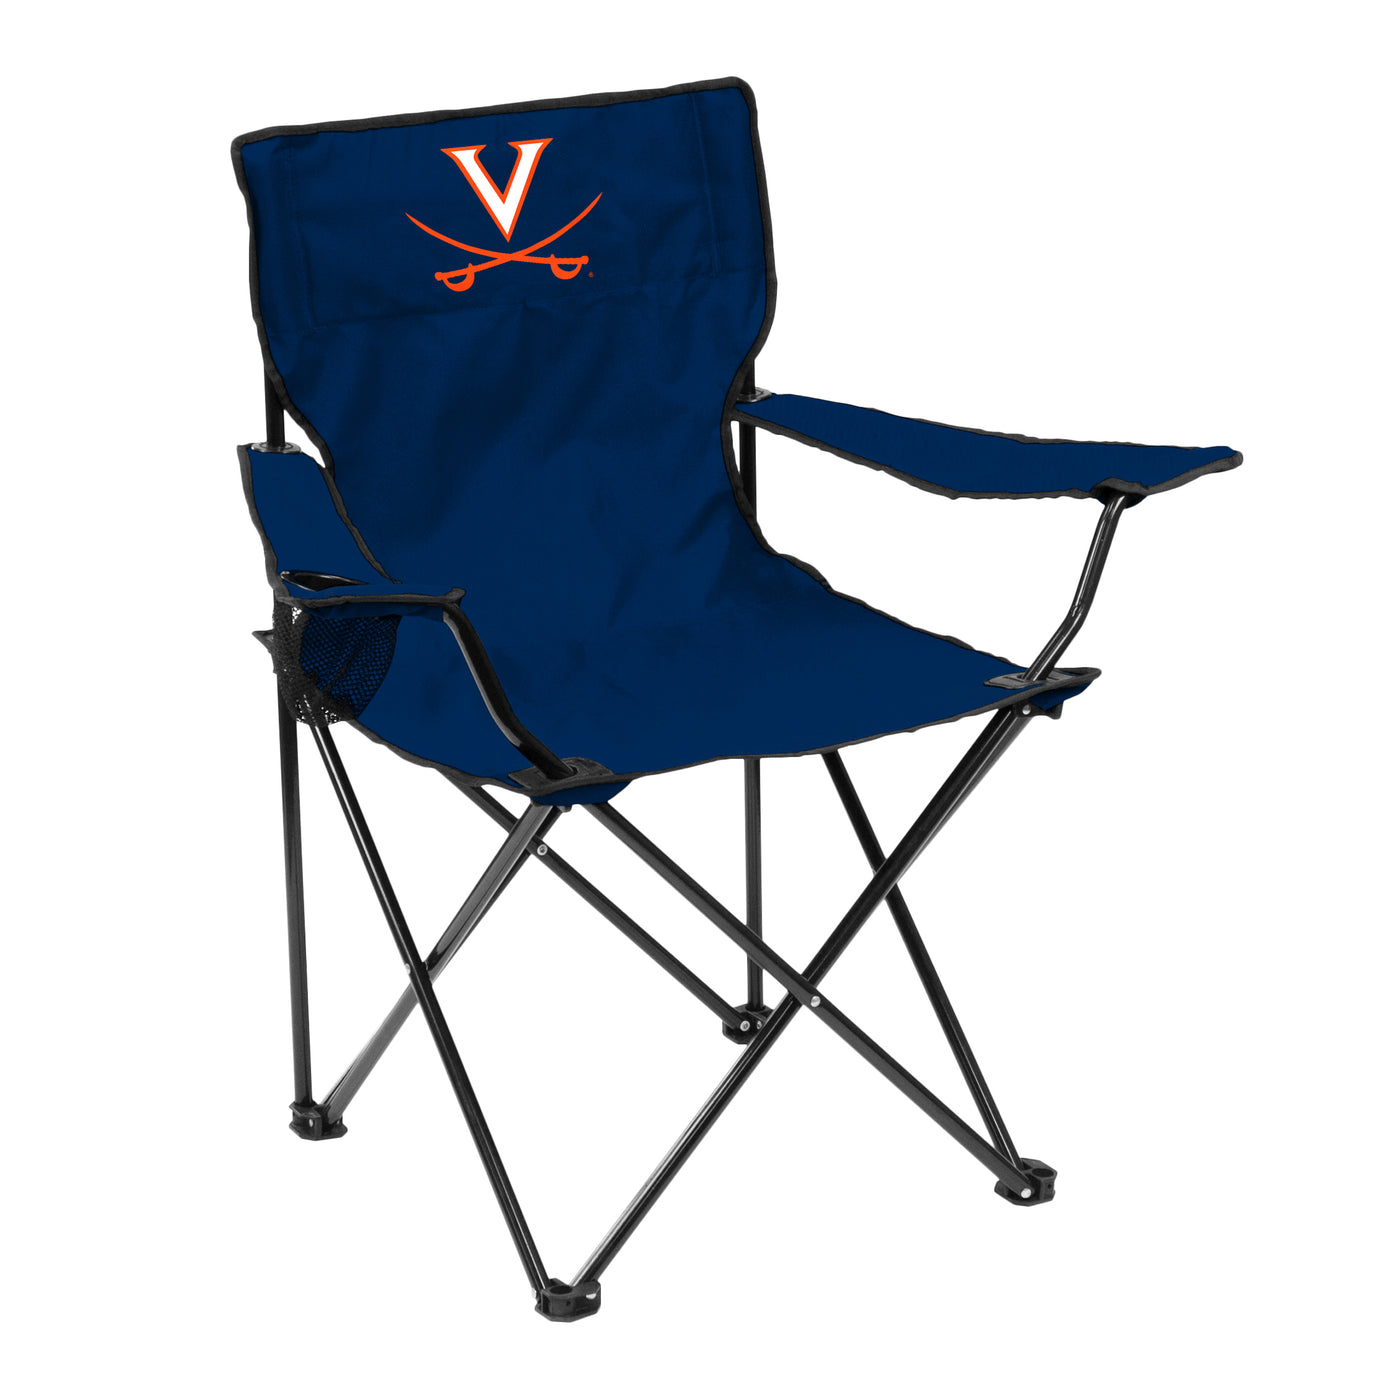 Virginia Quad Chair